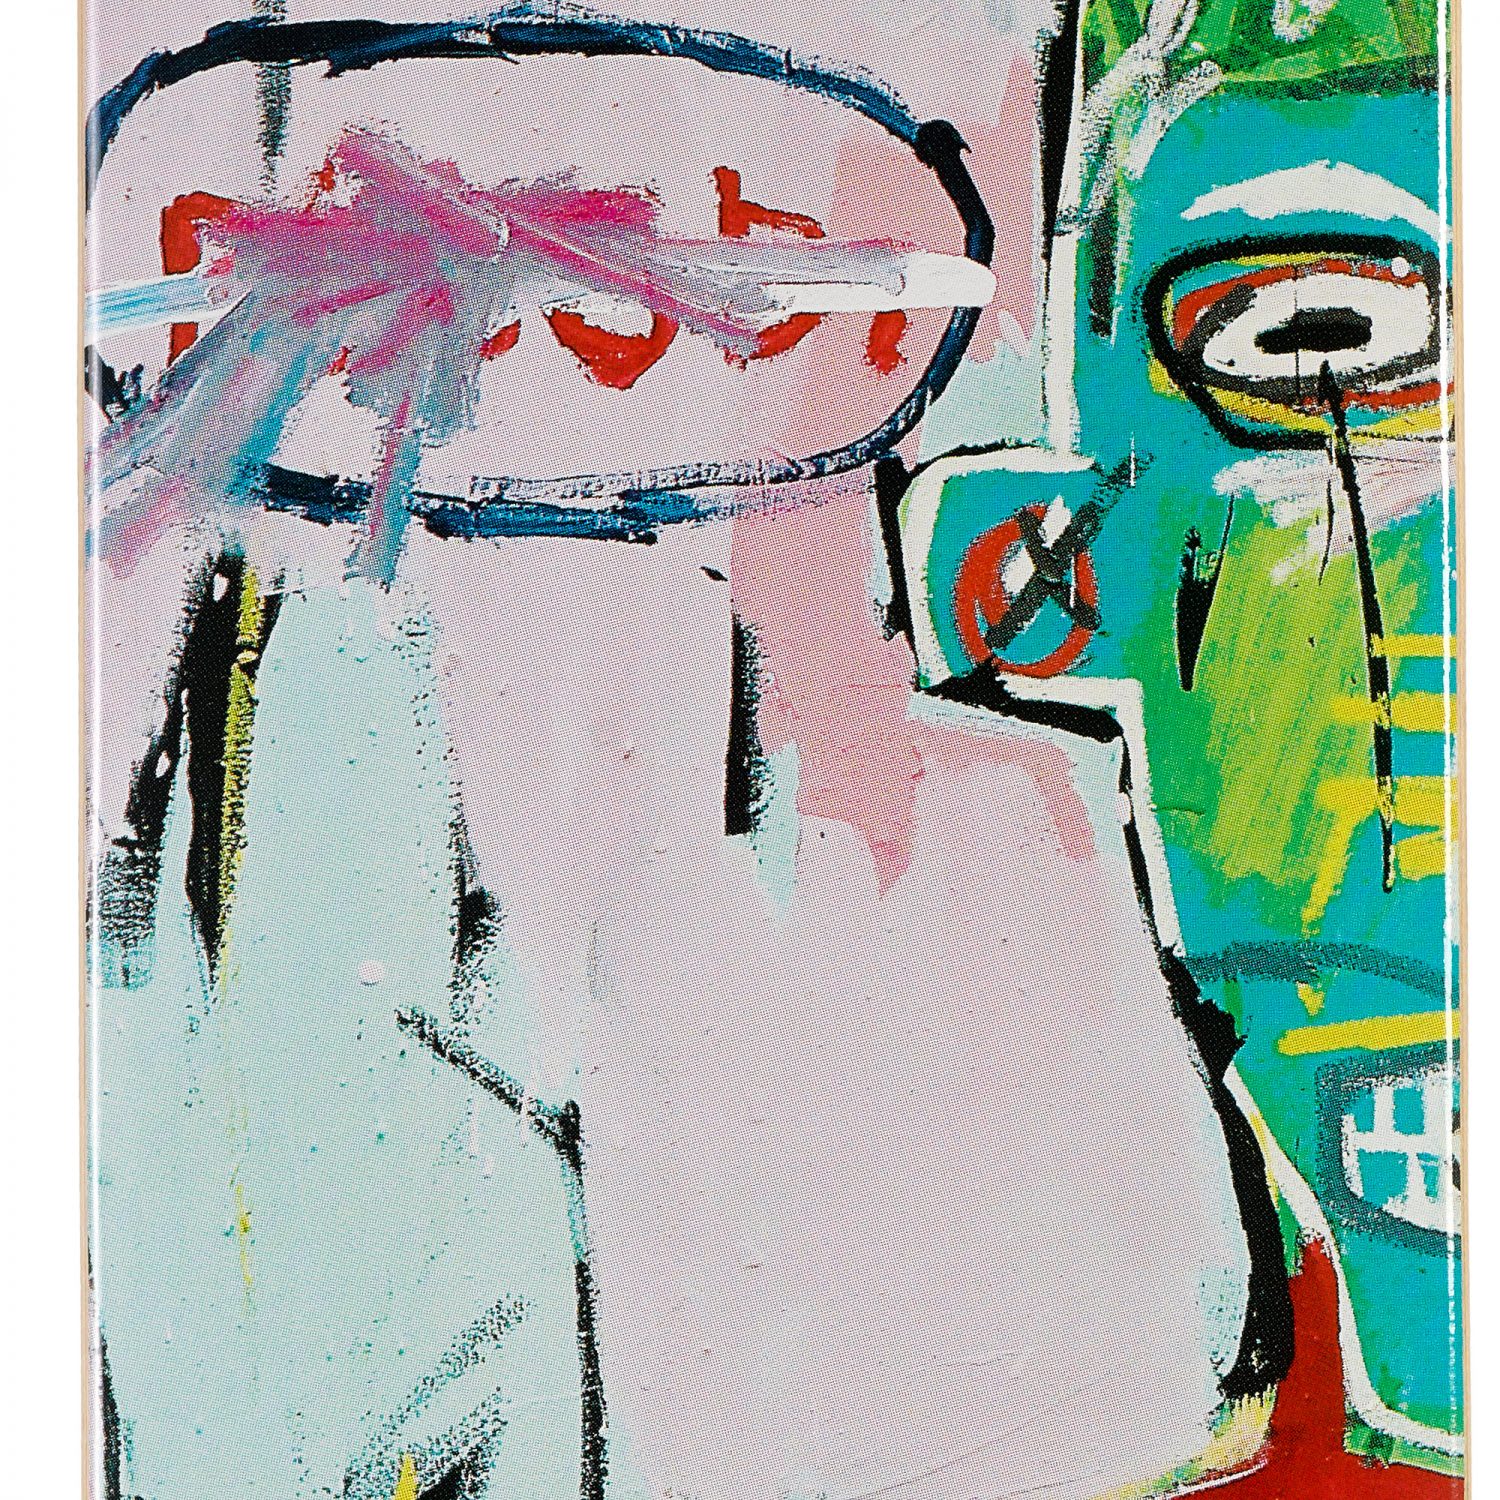 Jean Michel Basquiat editions on skateboards